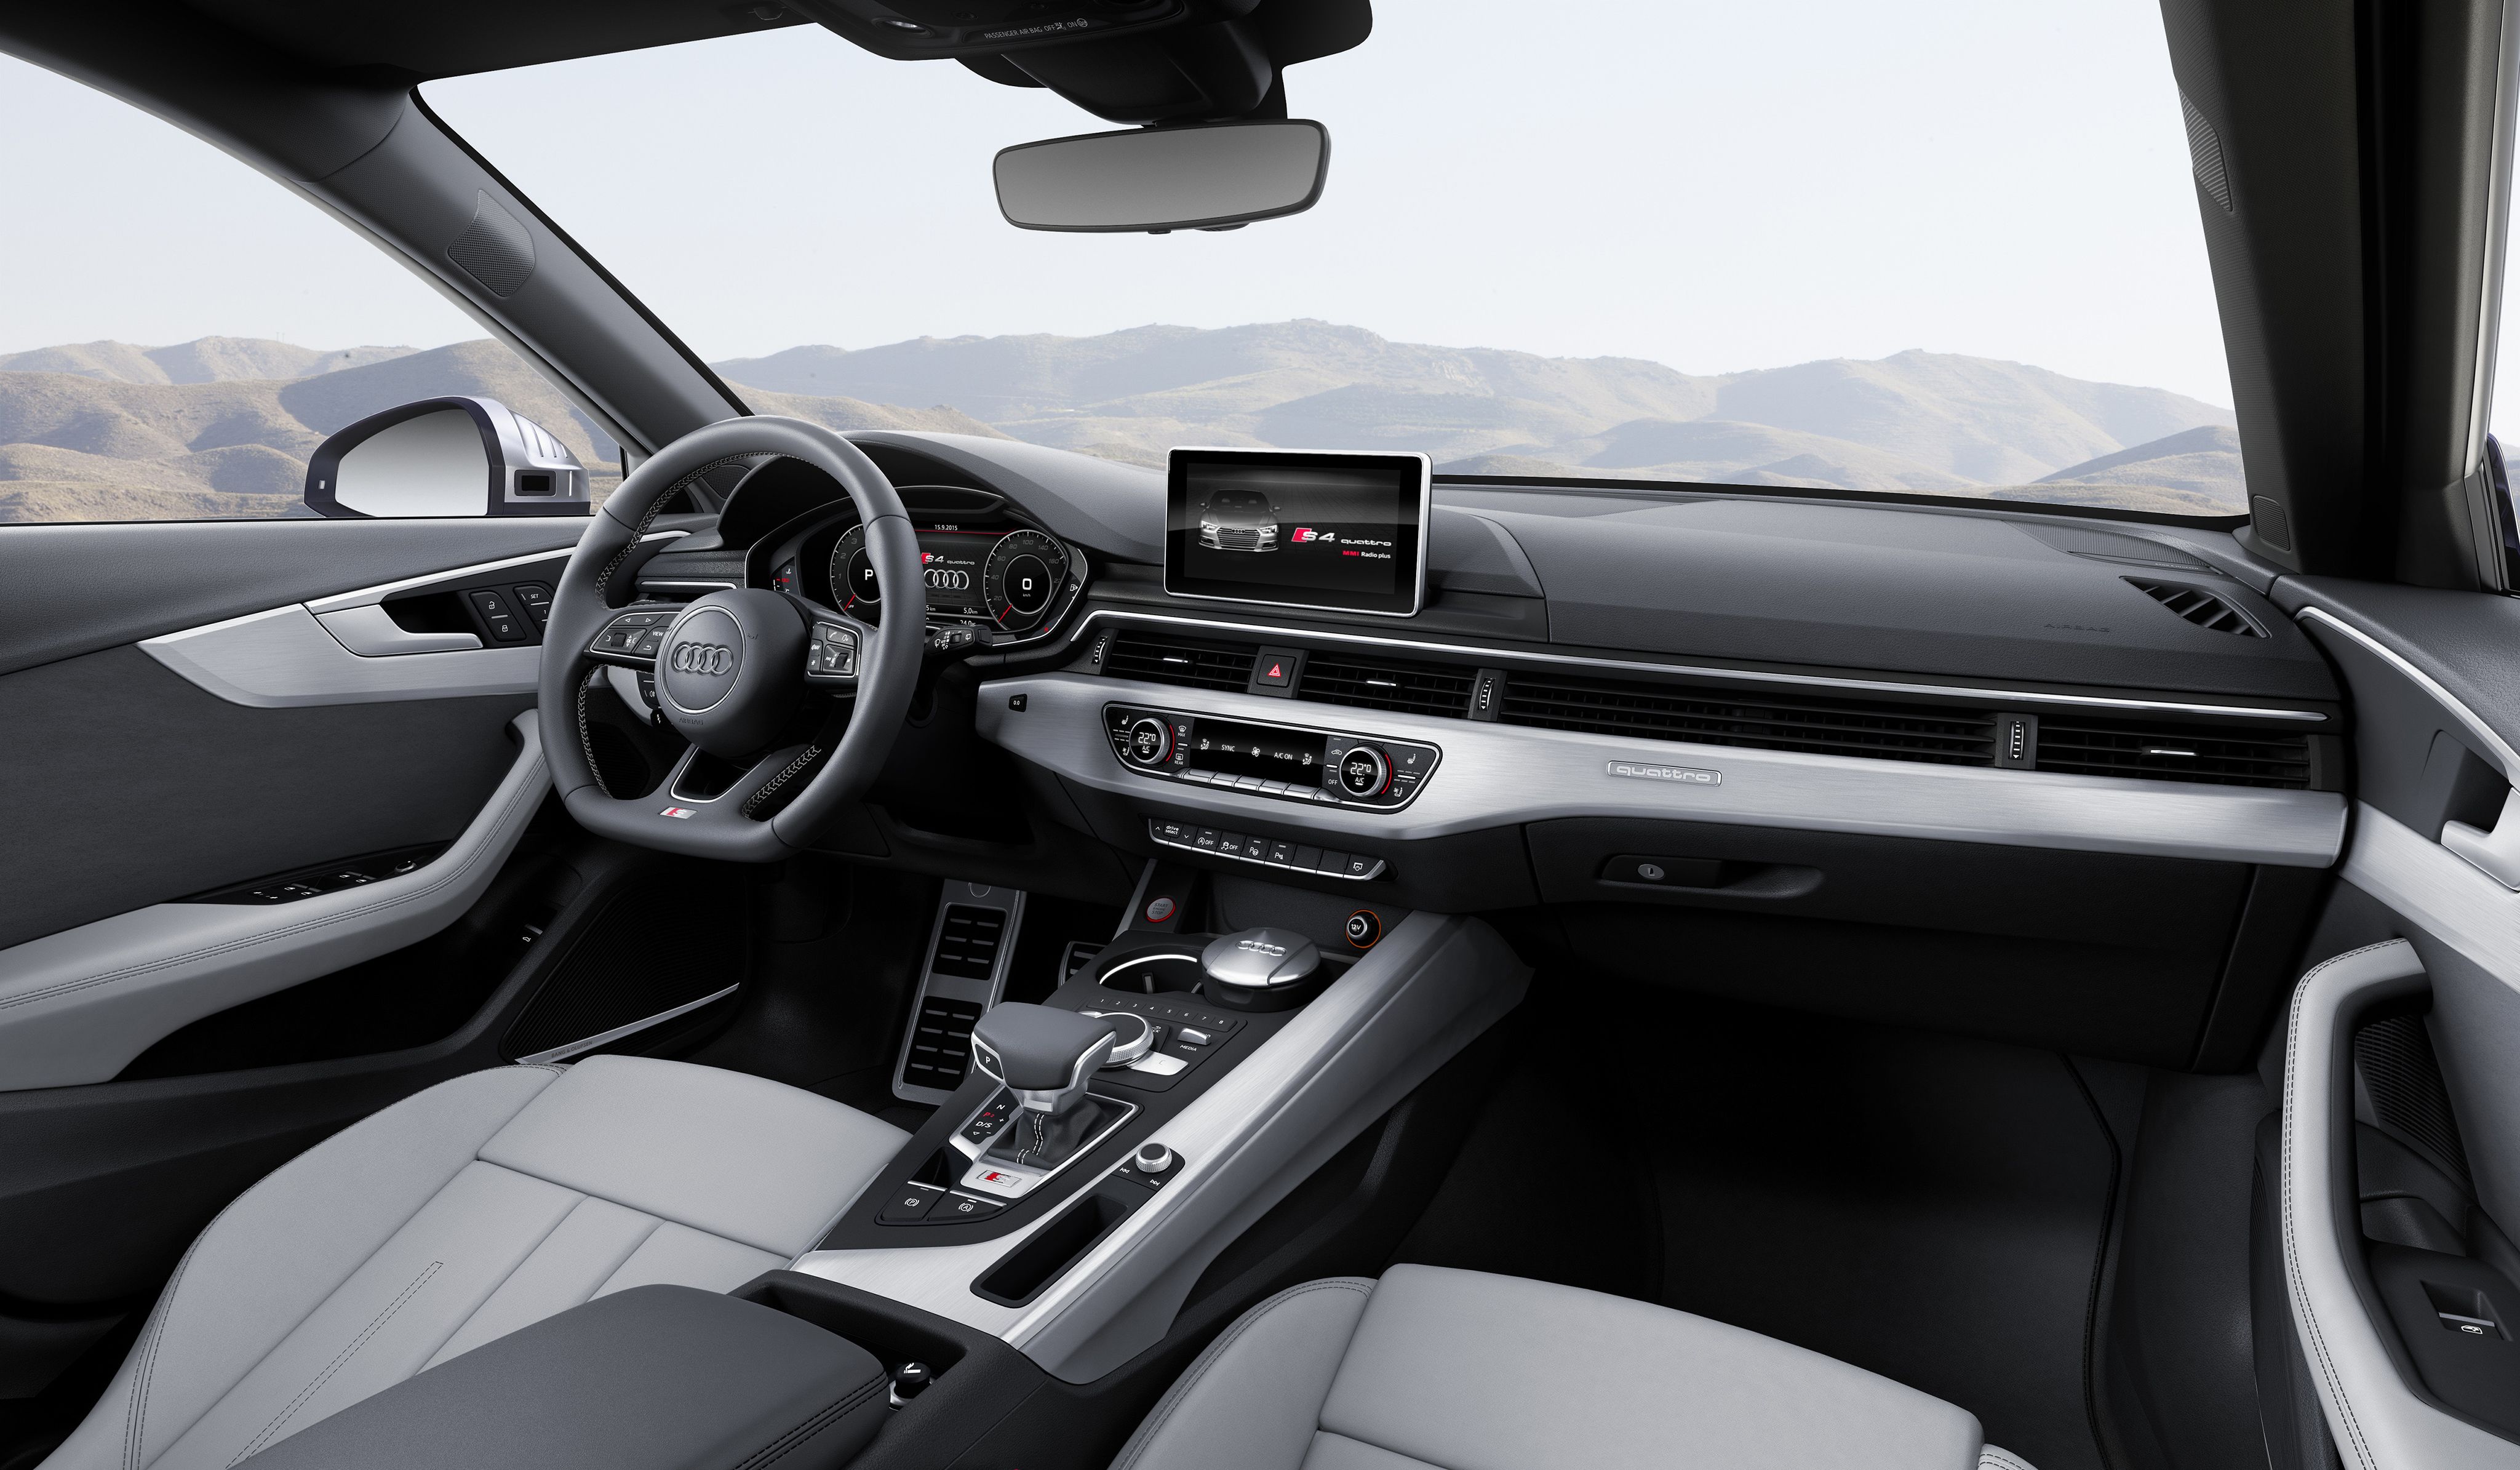 Audi A4 Avant accessories model